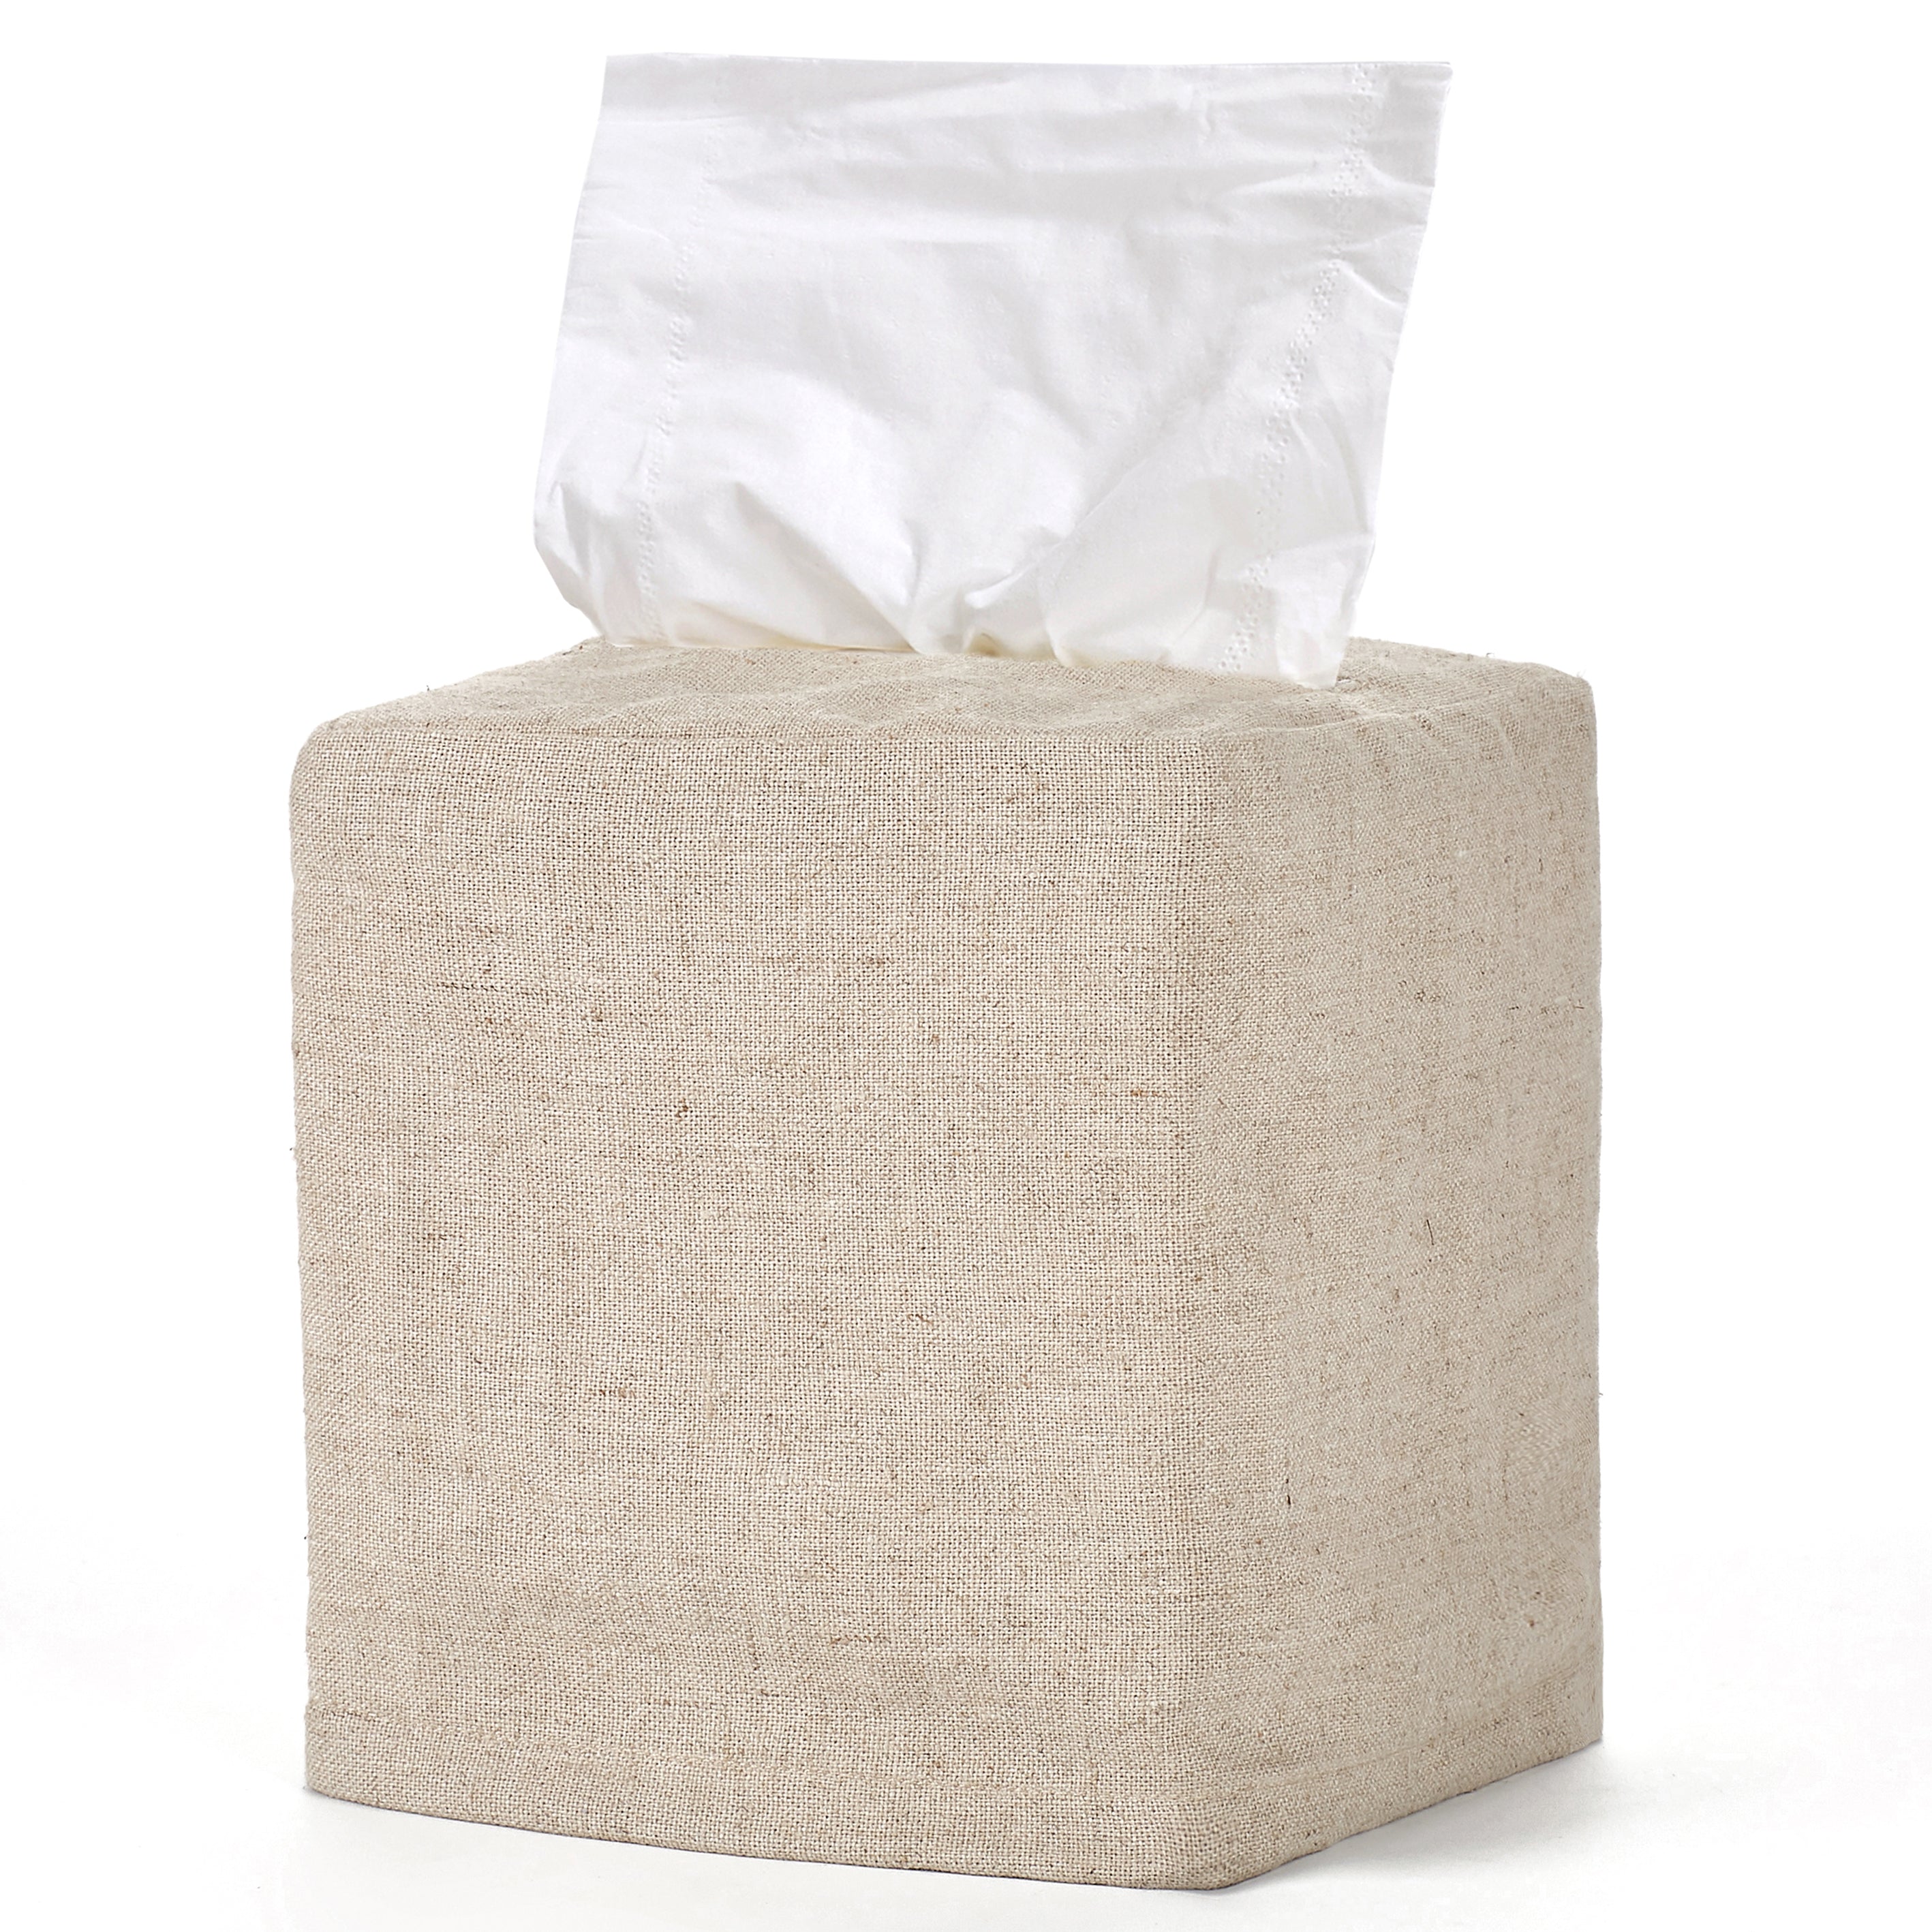 100% Linen Tissue Box